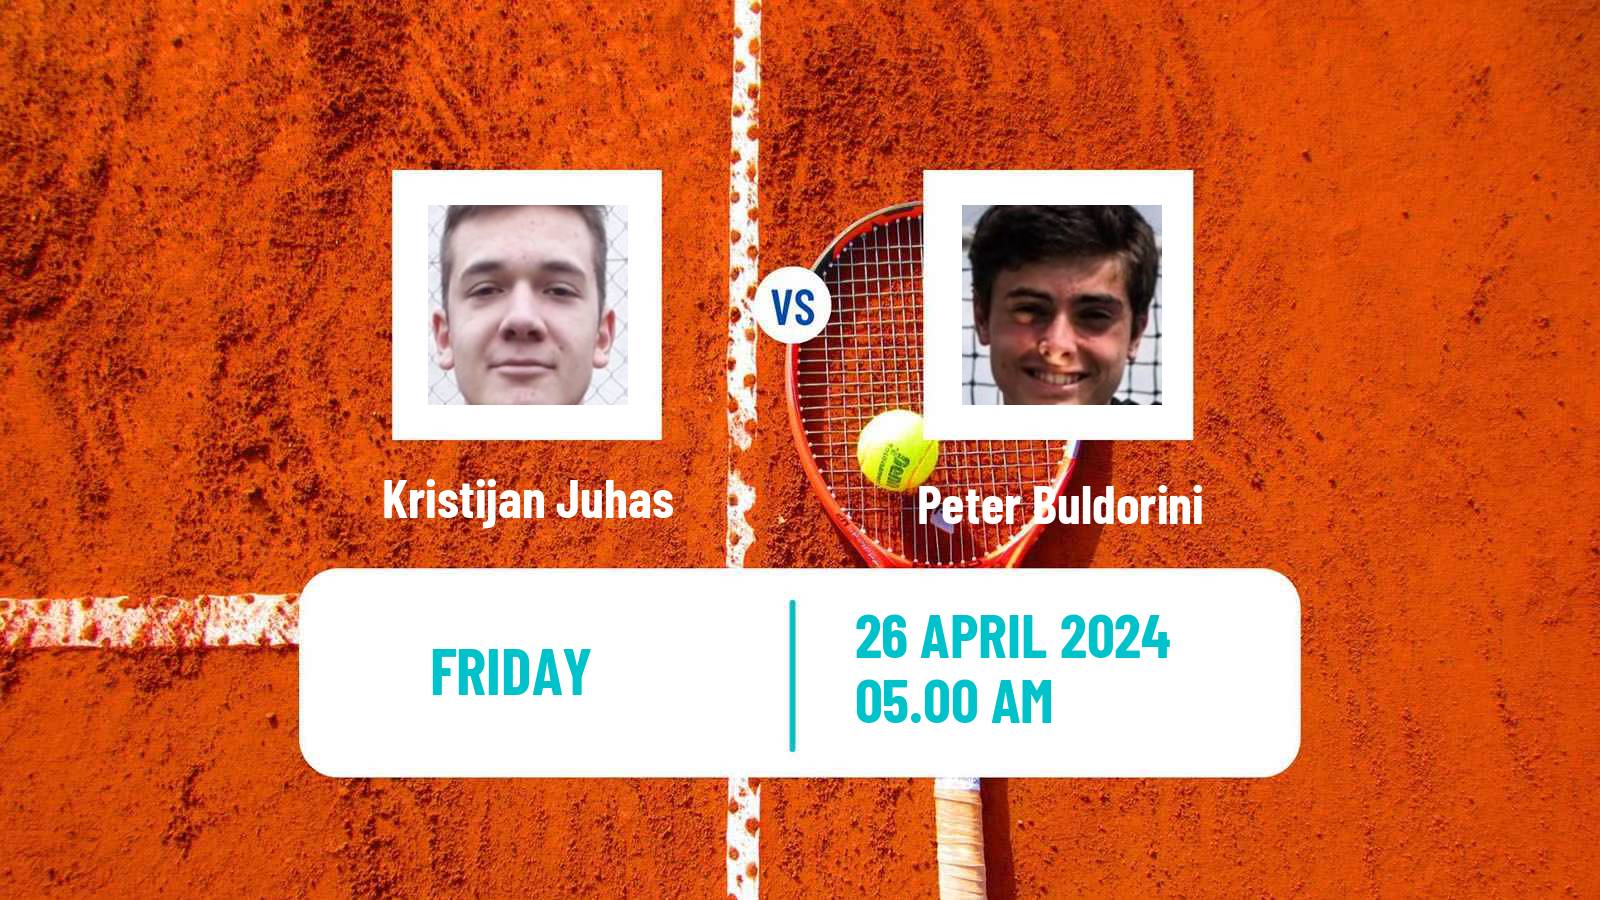 Tennis ITF M15 Kursumlijska Banja 2 Men Kristijan Juhas - Peter Buldorini